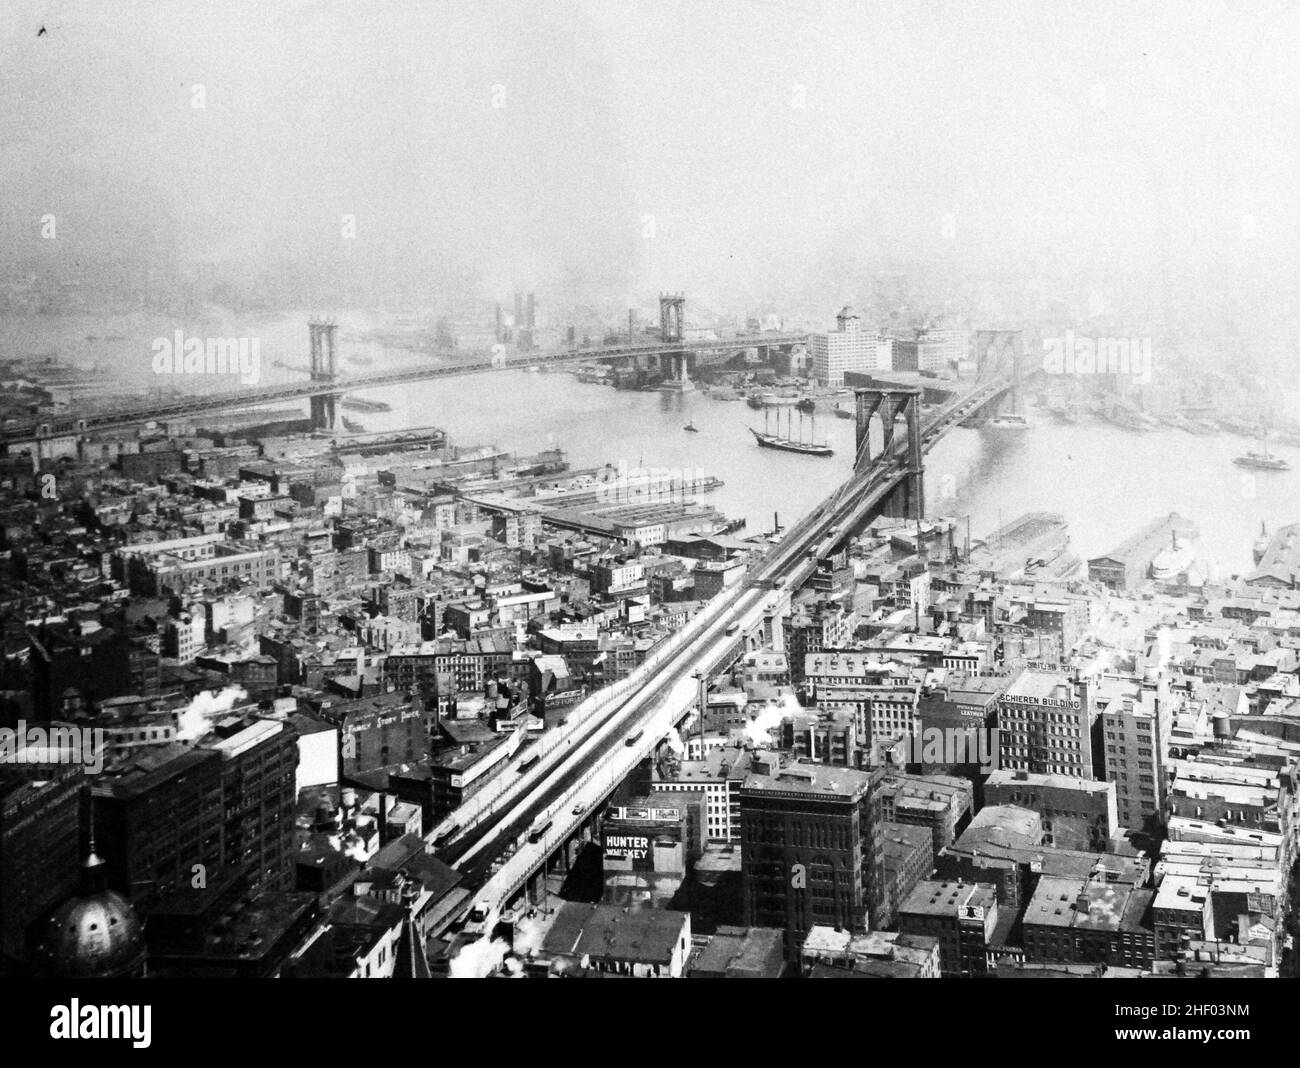 Brooklyn and Manhattan Bridge, New York City Skyline, New York, photo by Irving Underhill, 1916. Vintage New York photo. Stock Photo